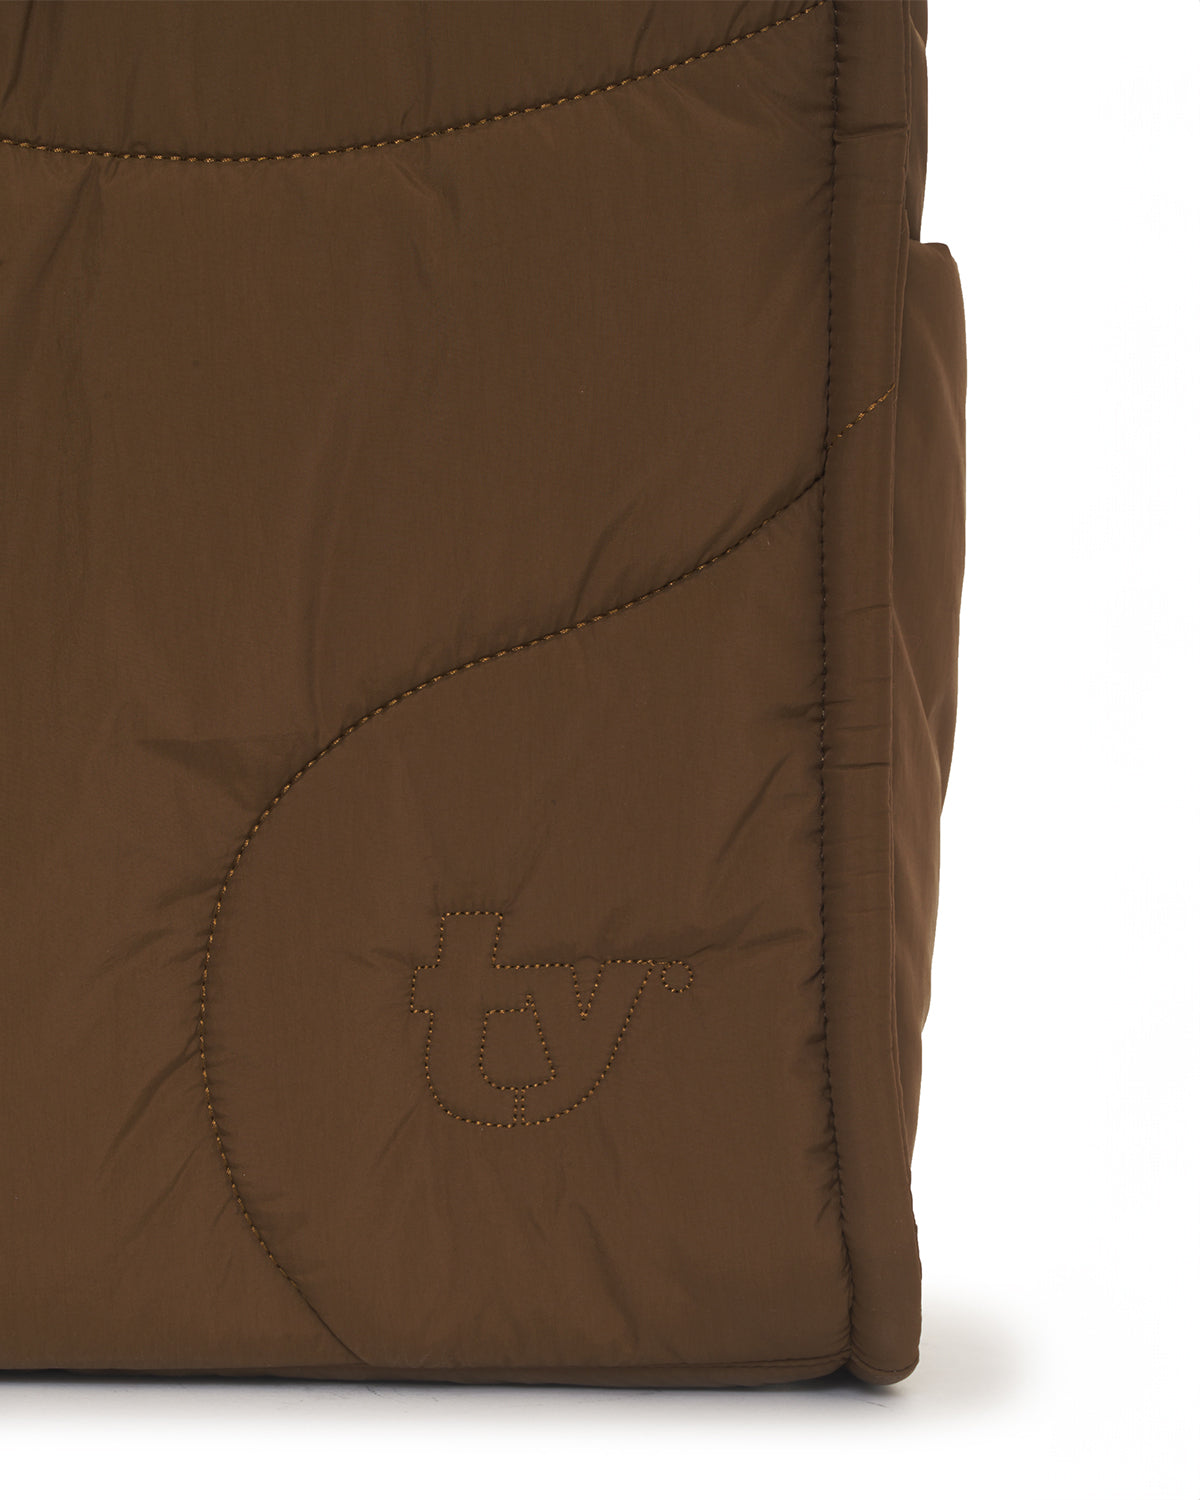 brown chocolate drift puffer tote bag gym side pocket crossbody strap